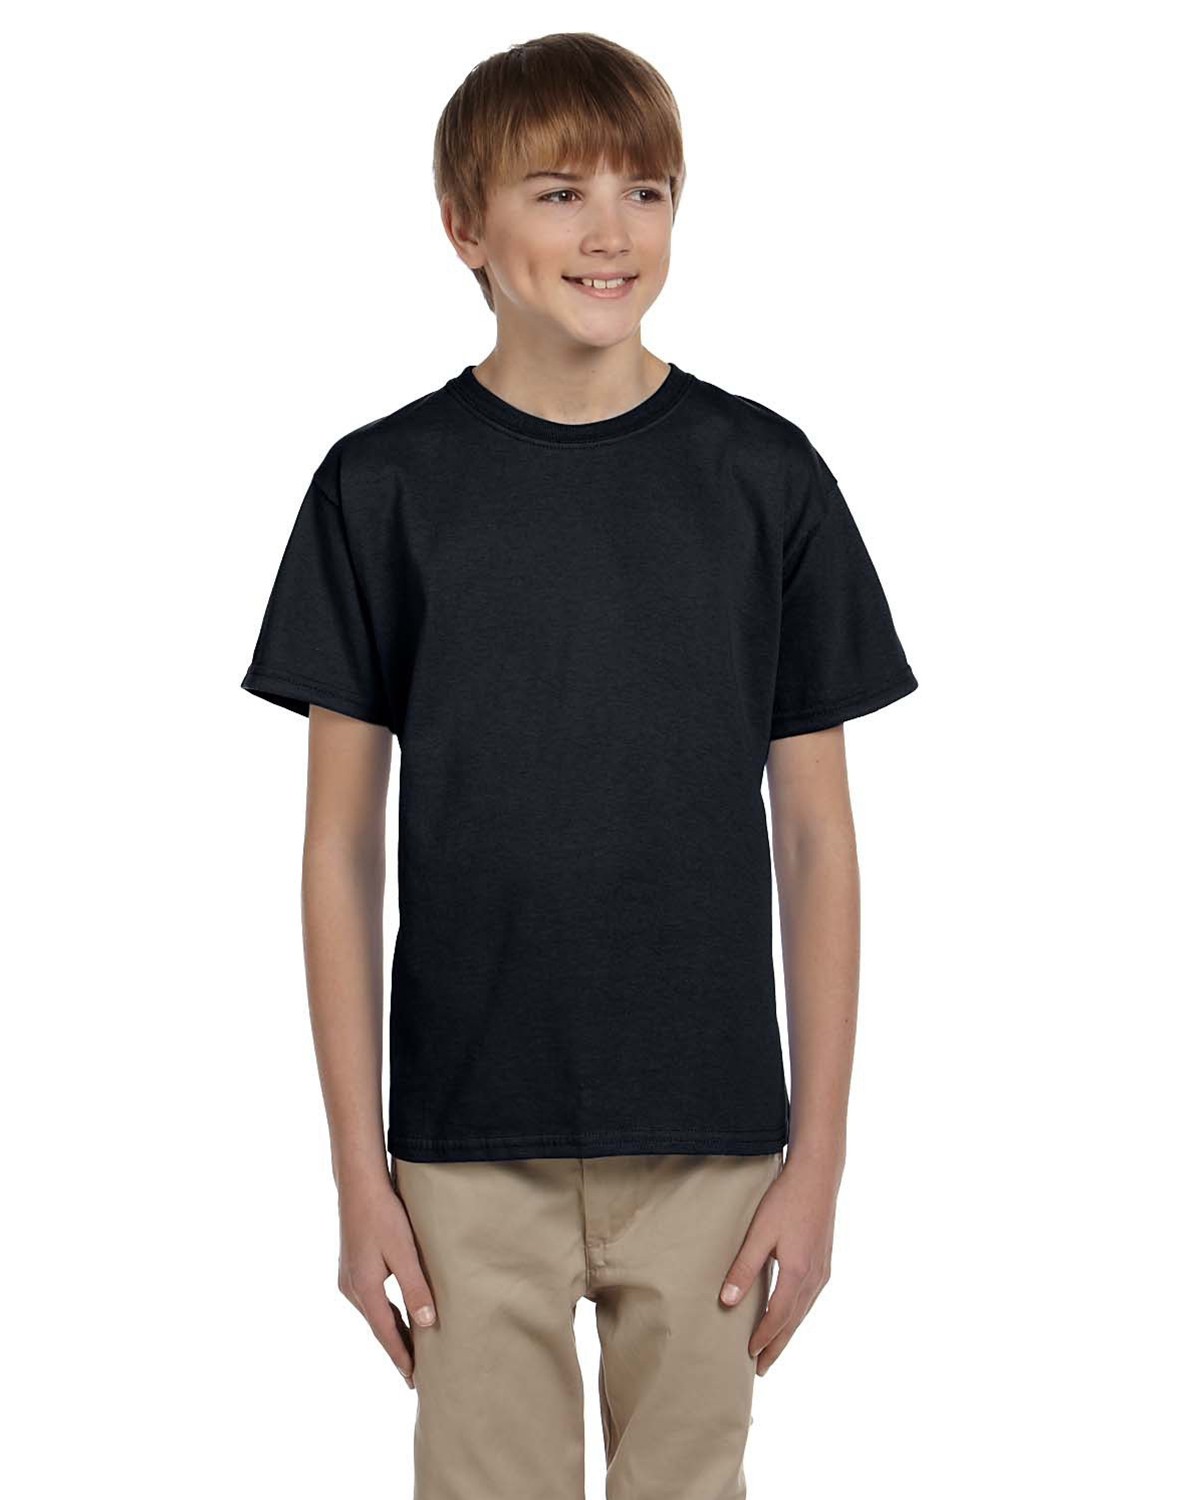 Hanes 5370 Youth 50/50 ComfortBlend EcoSmart T-Shirt